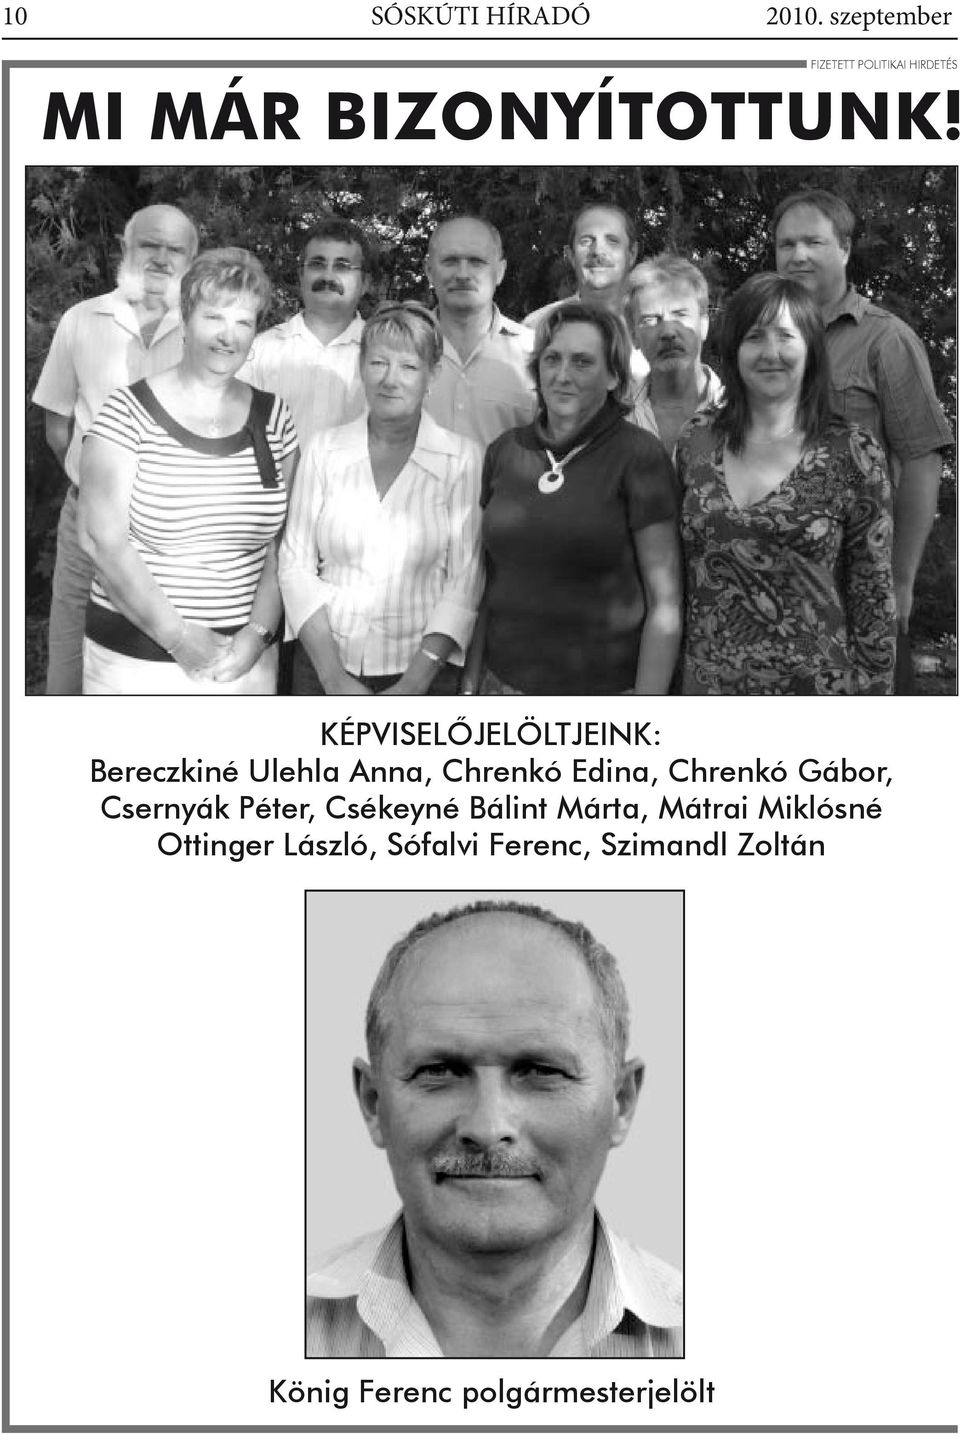 Képviselőjelöltjeik: Bereczkié Ulehla Aa, Chrekó Edia, Chrekó Gábor,